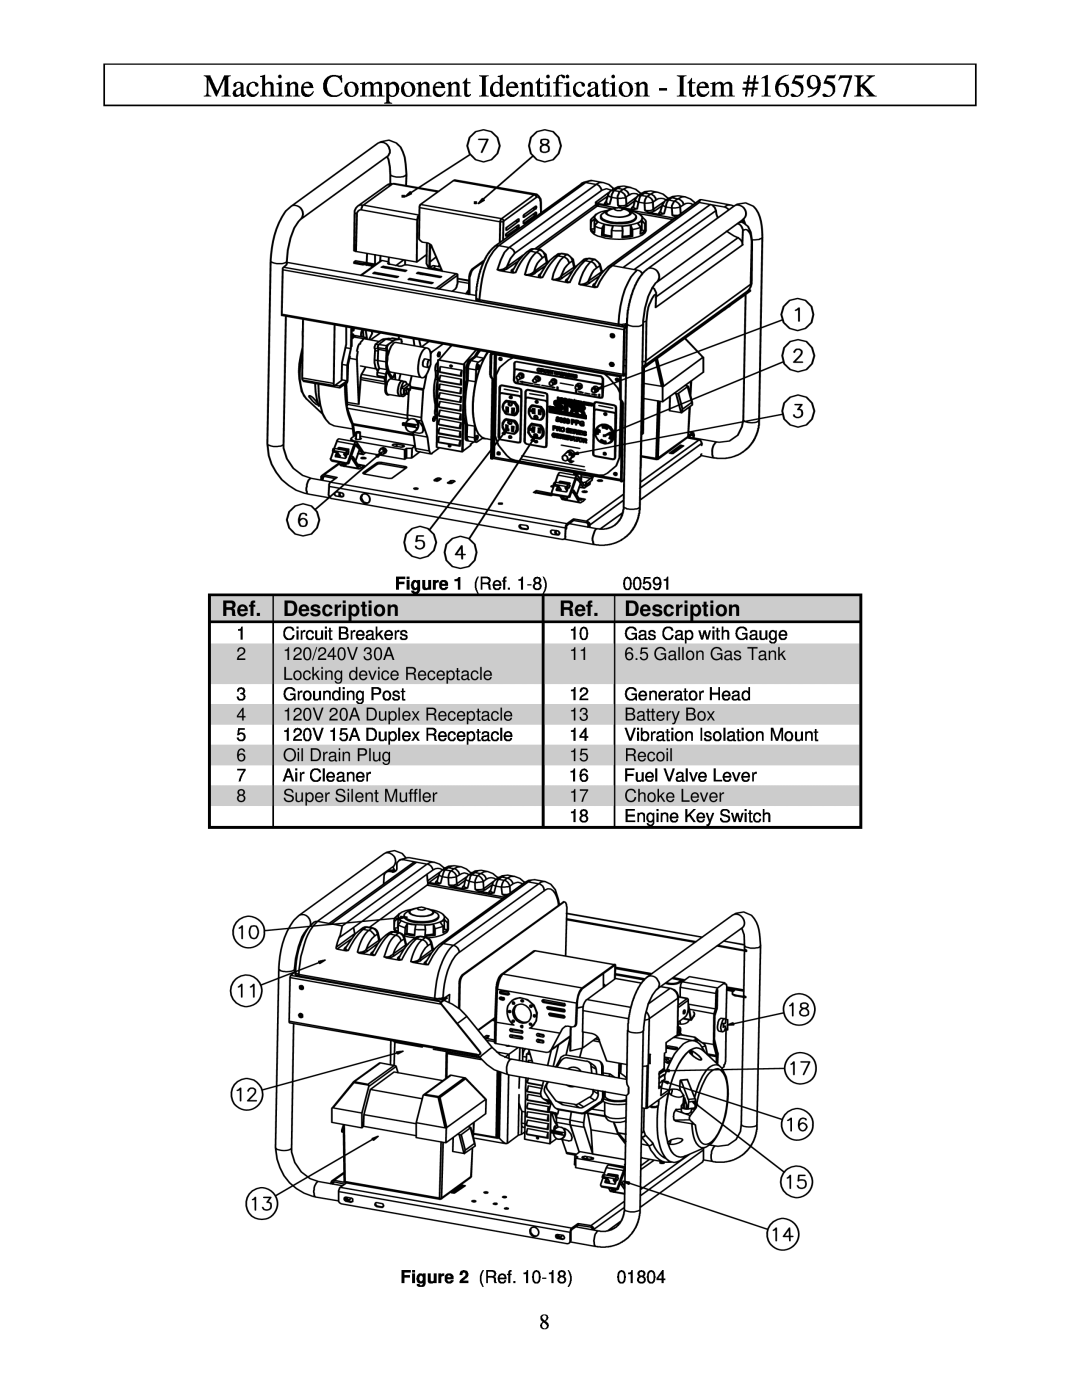 North Star M165957K owner manual Machine Component Identification - Item #165957K, Description 